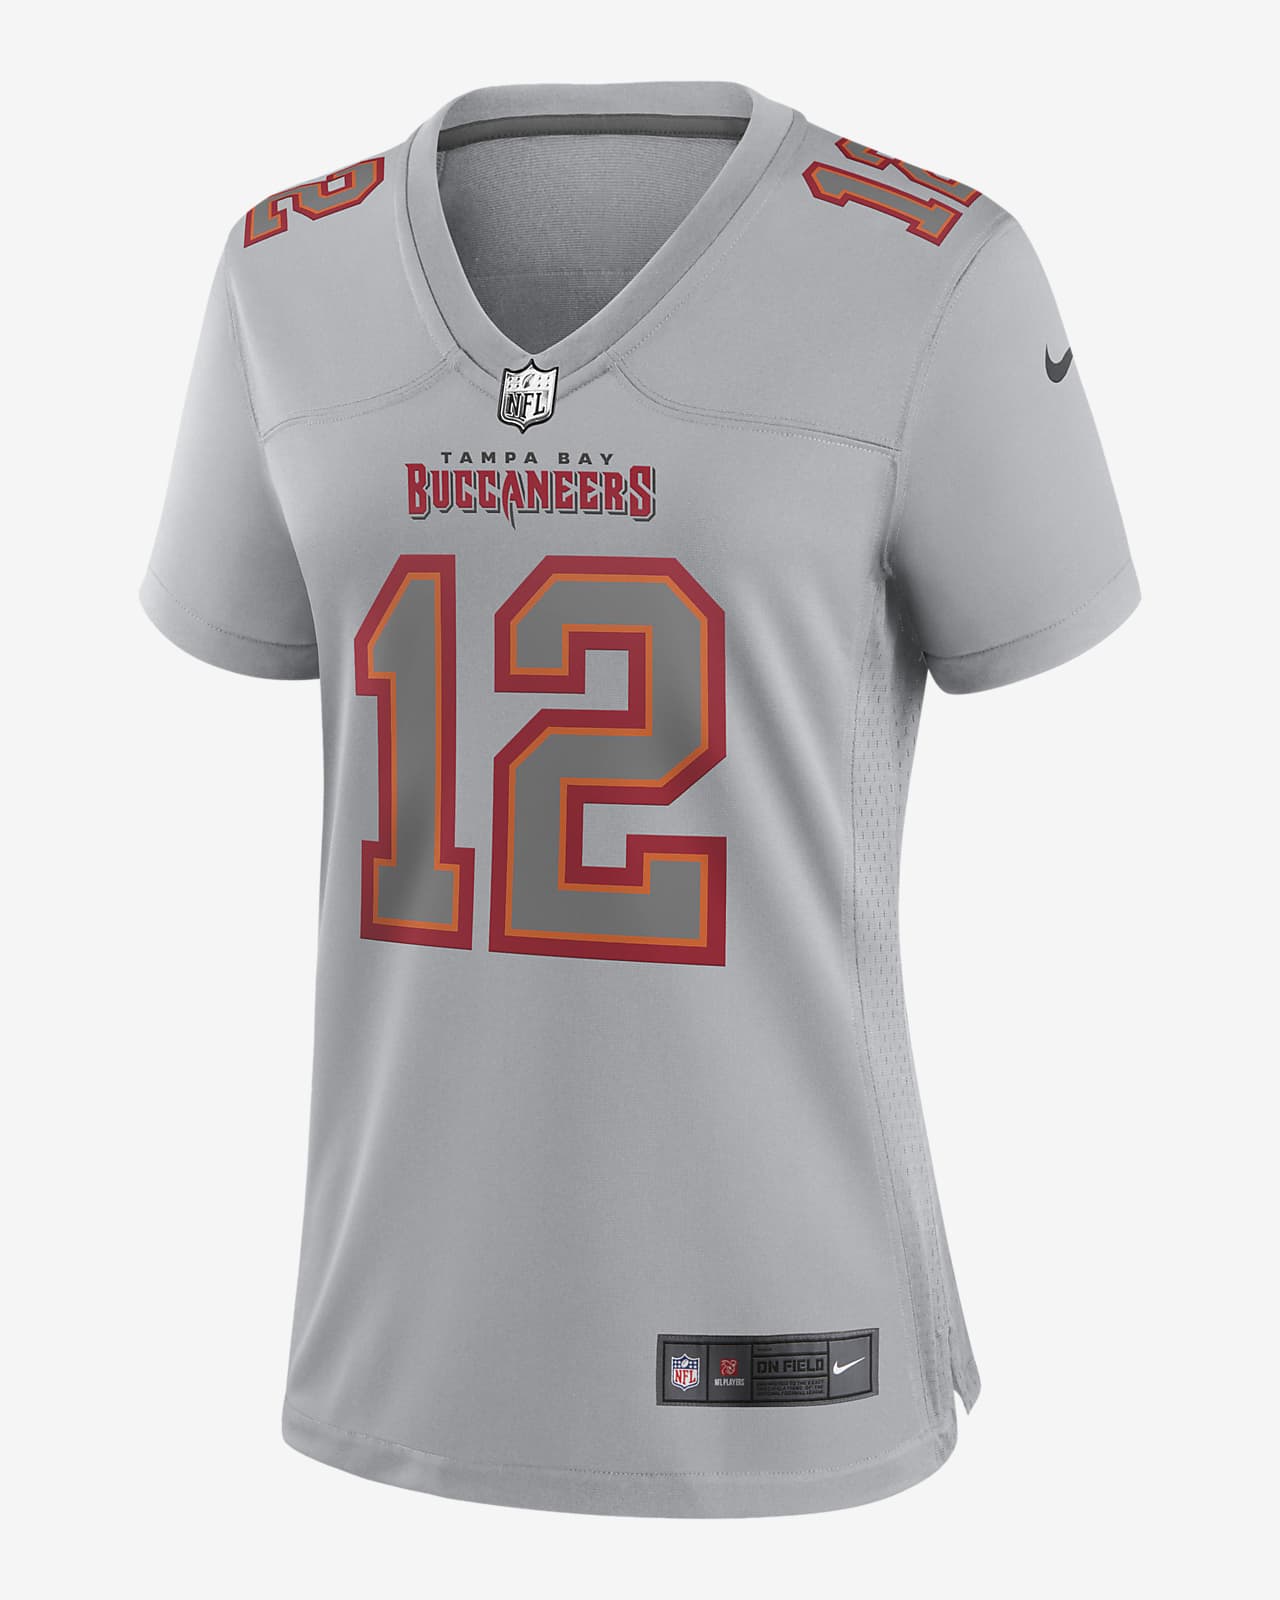 NFL Tampa Bay Buccaneers Atmosphere (Tom Brady) Women's Fashion Football Jersey